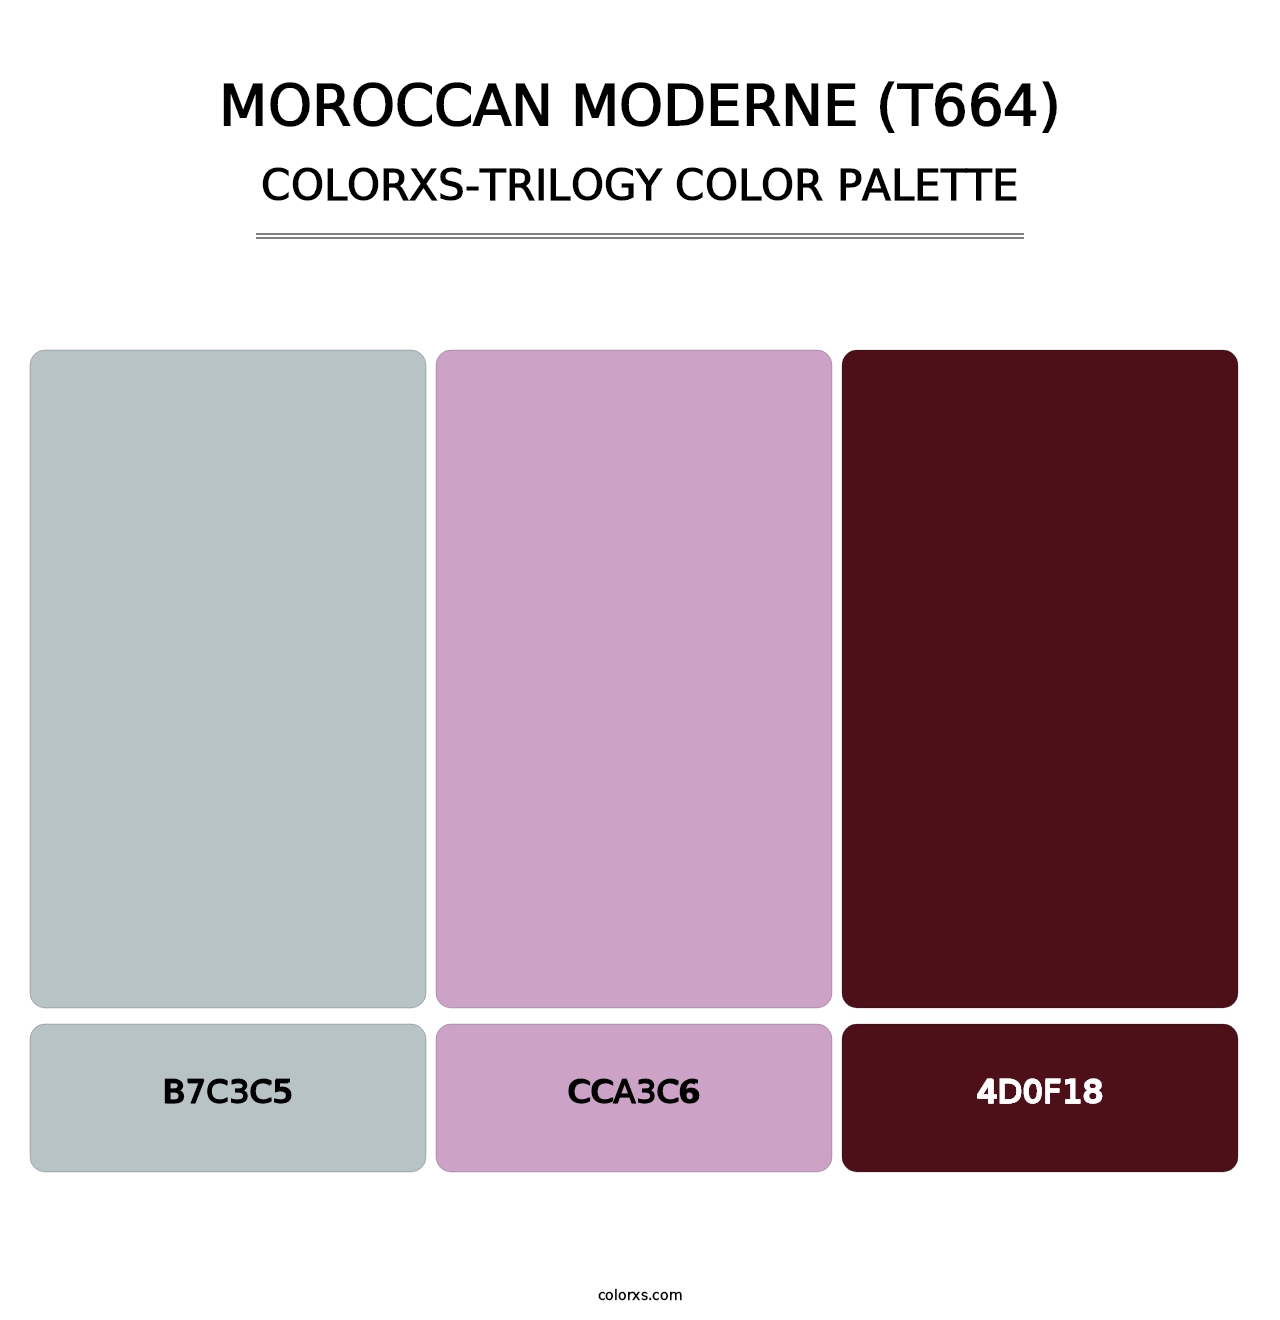 Moroccan Moderne (T664) - Colorxs Trilogy Palette